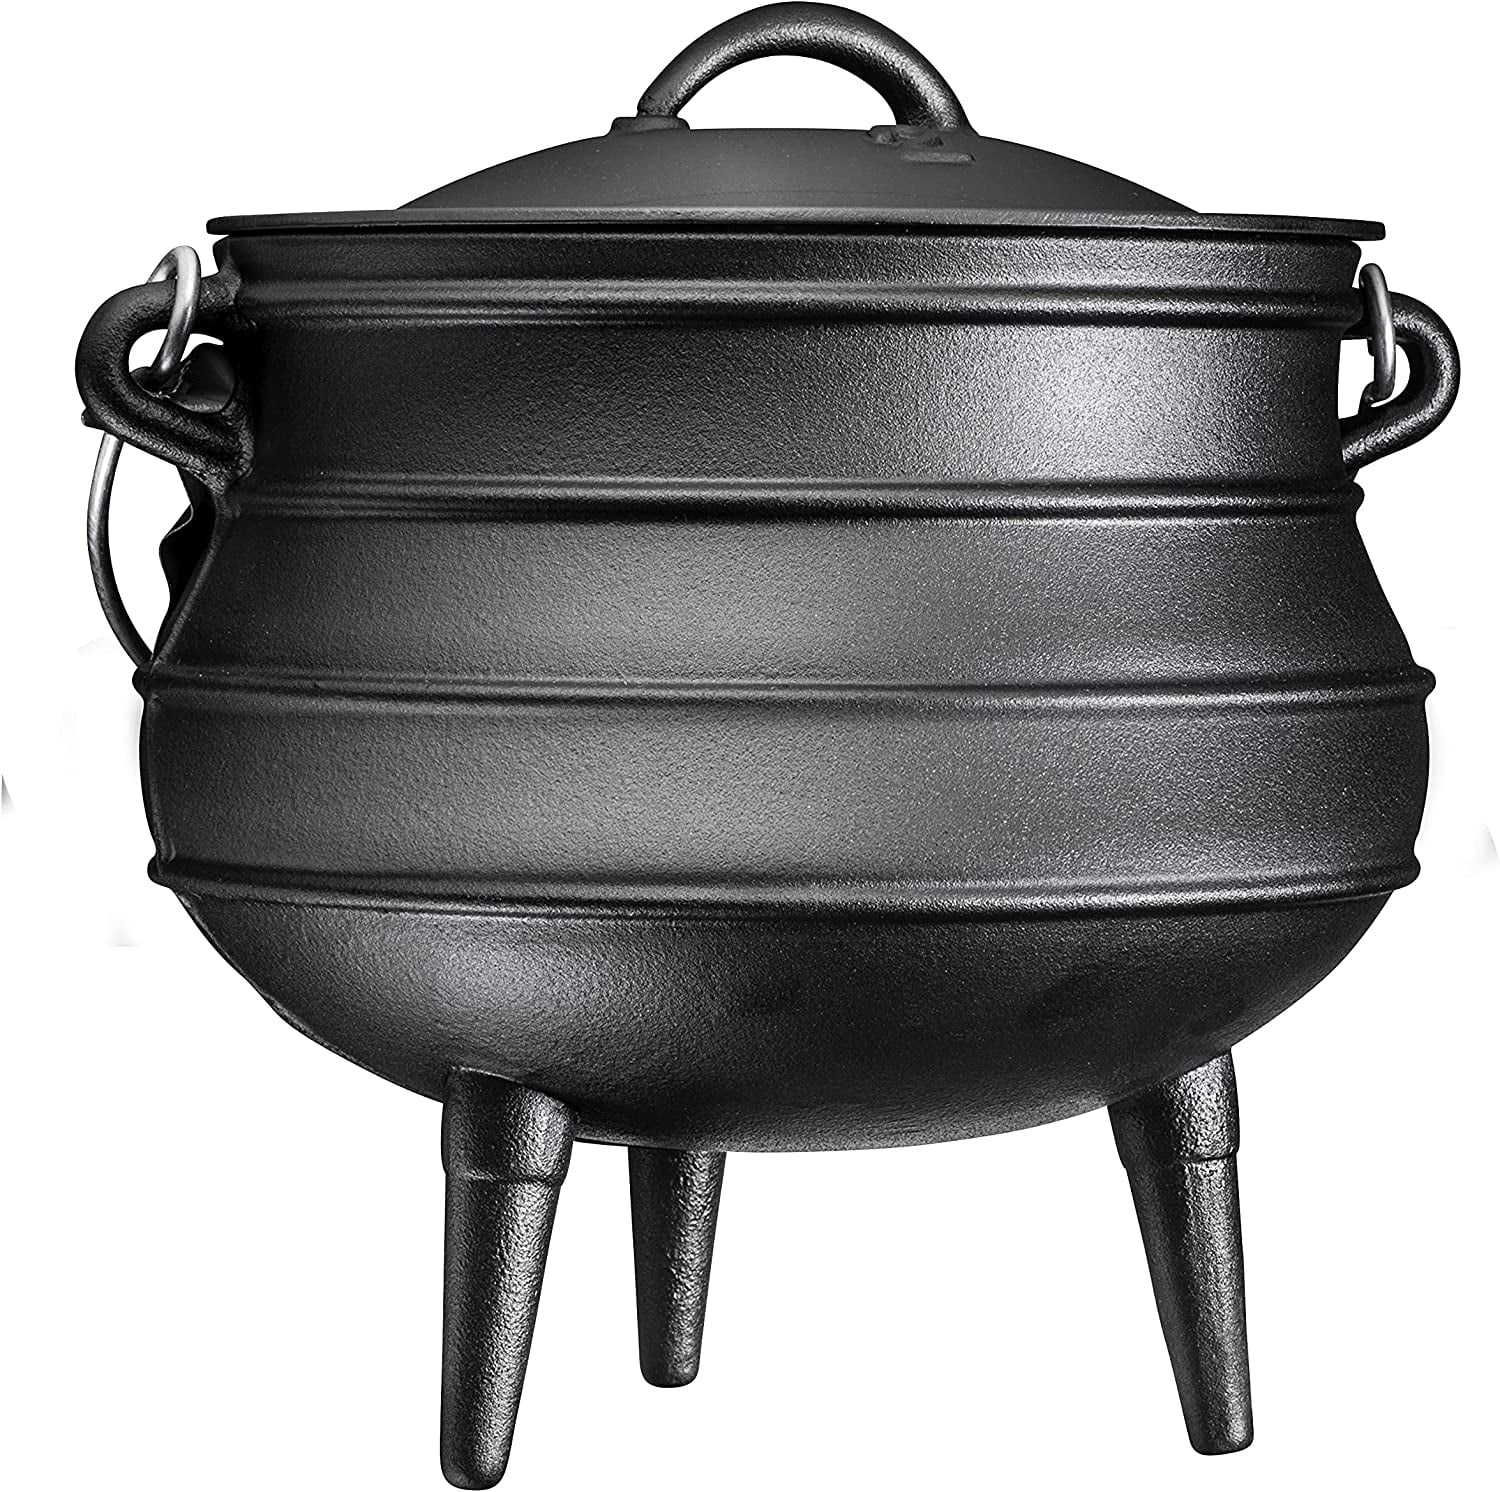 Cast Iron Potjie Pot Cauldron - 42 oz. Size 1/2